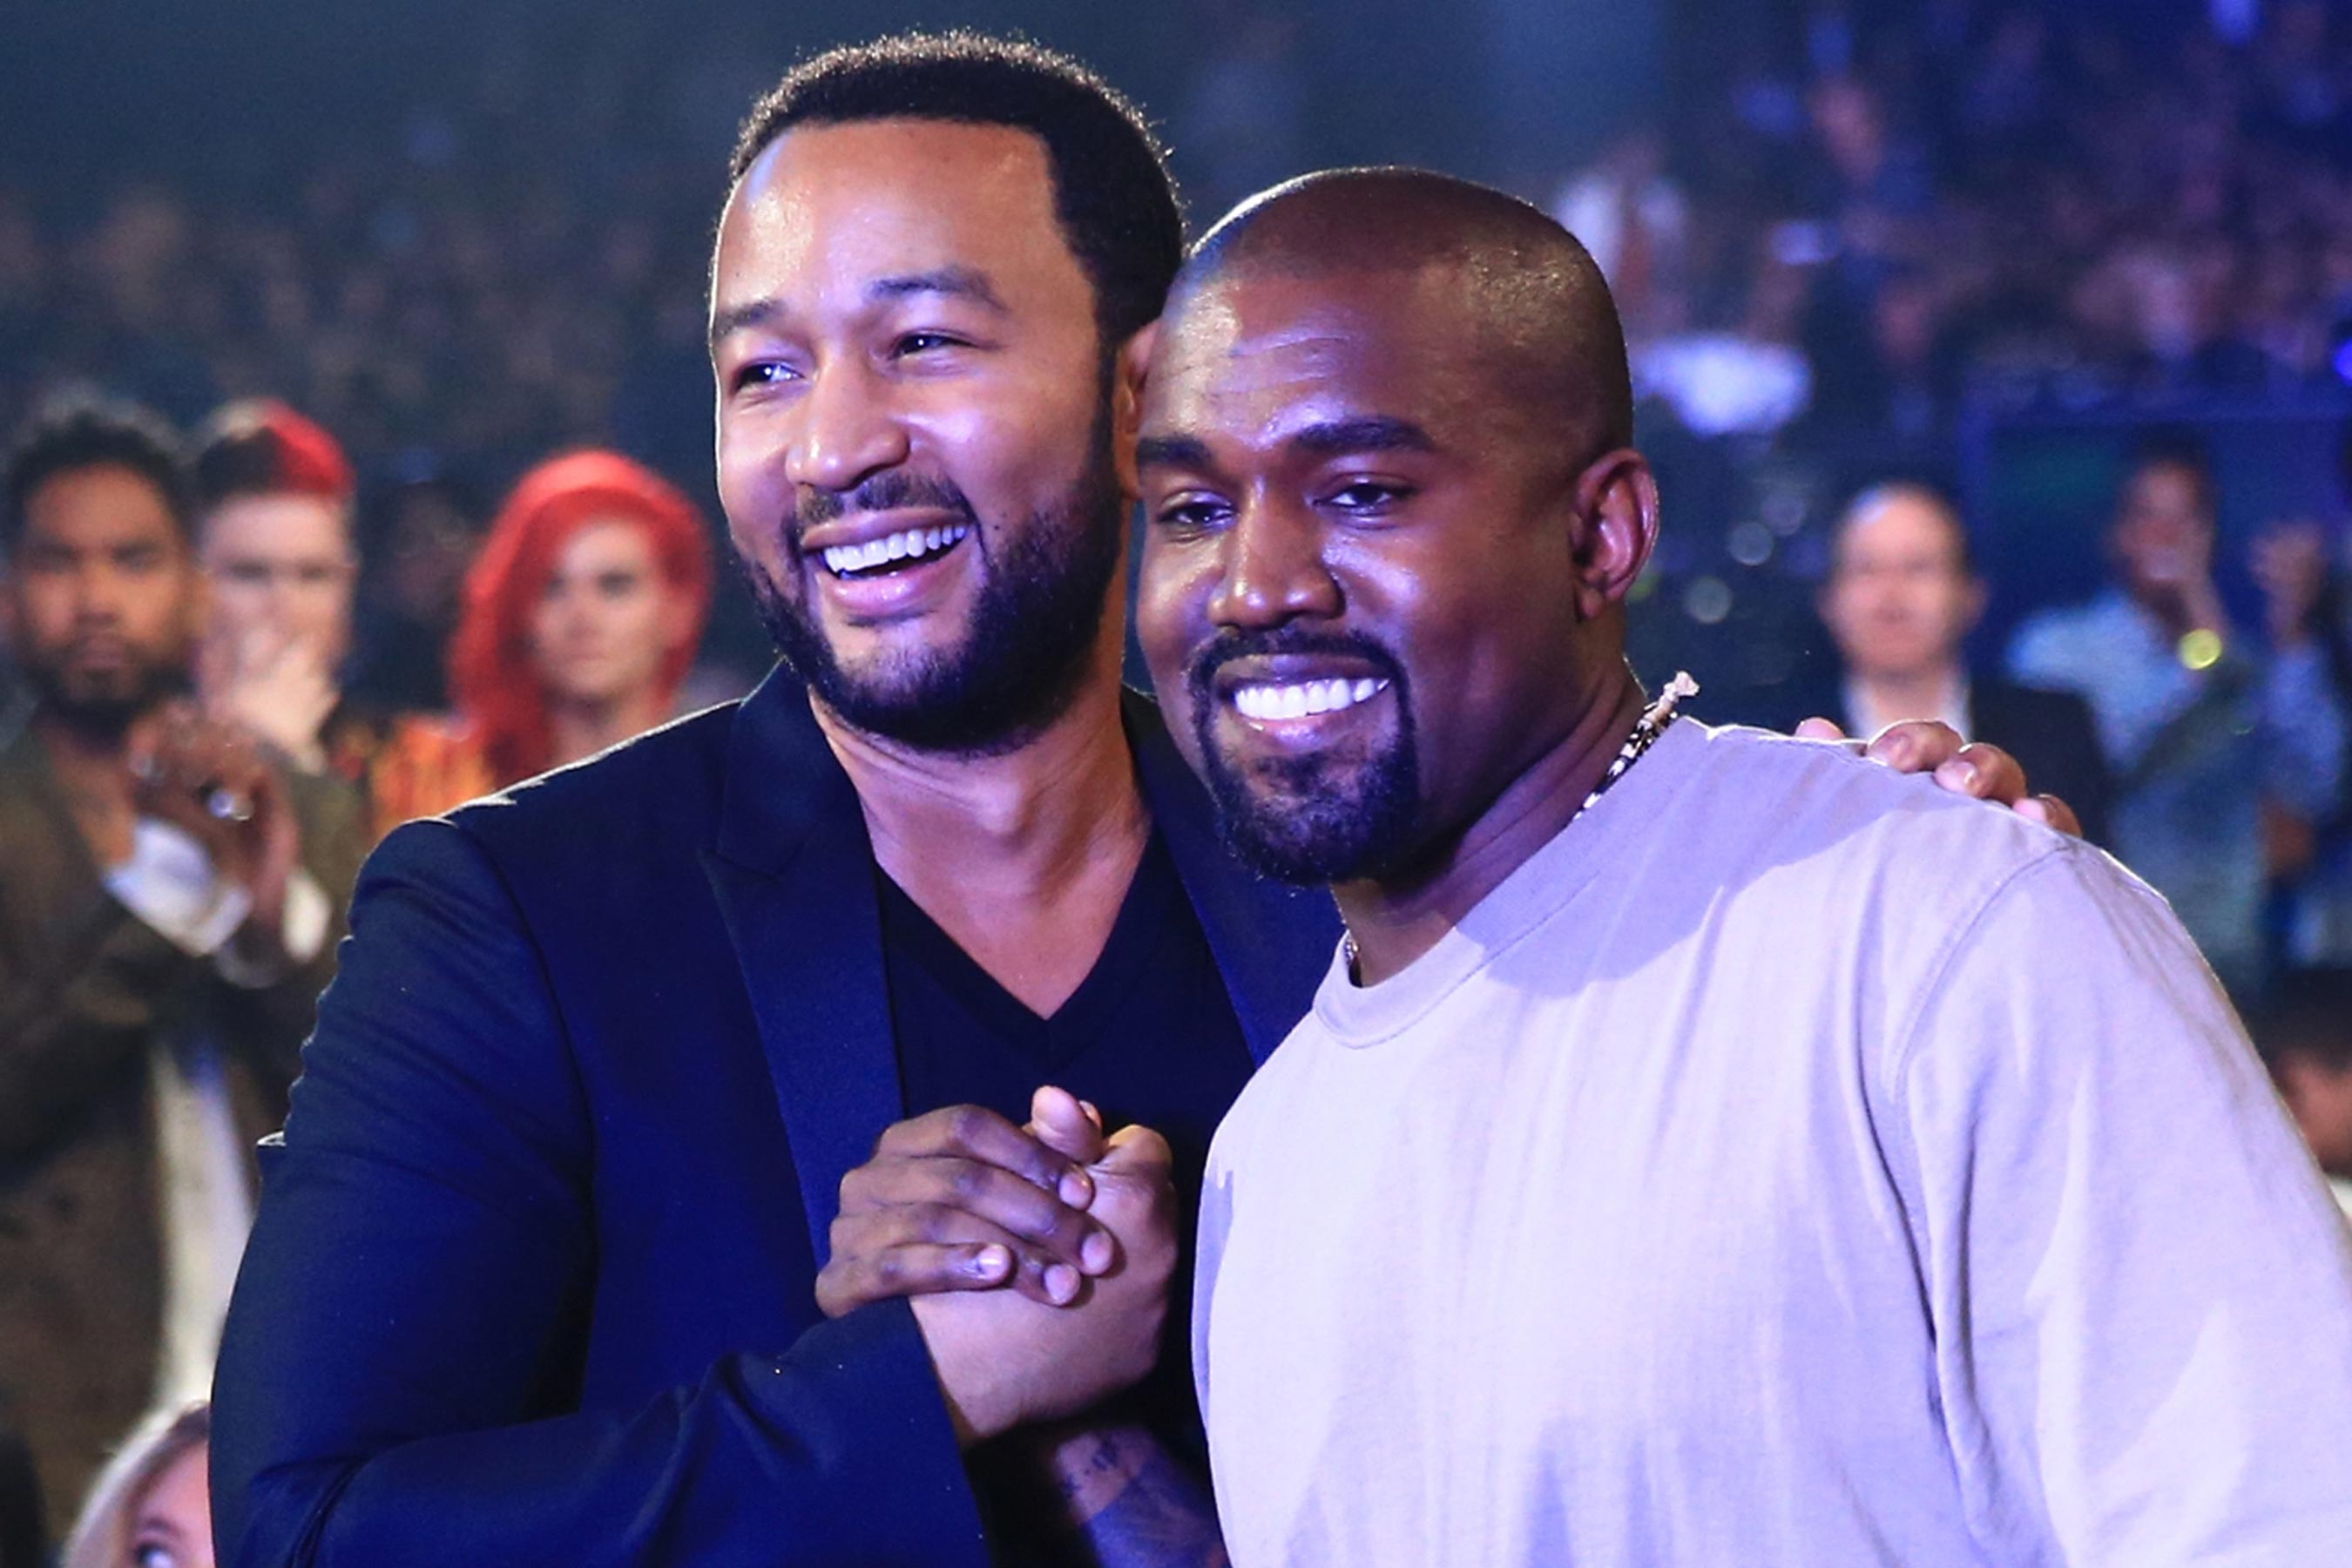 John Legend dice que va muy en serio que Kanye West se postule a presidente. Cusica Plus.